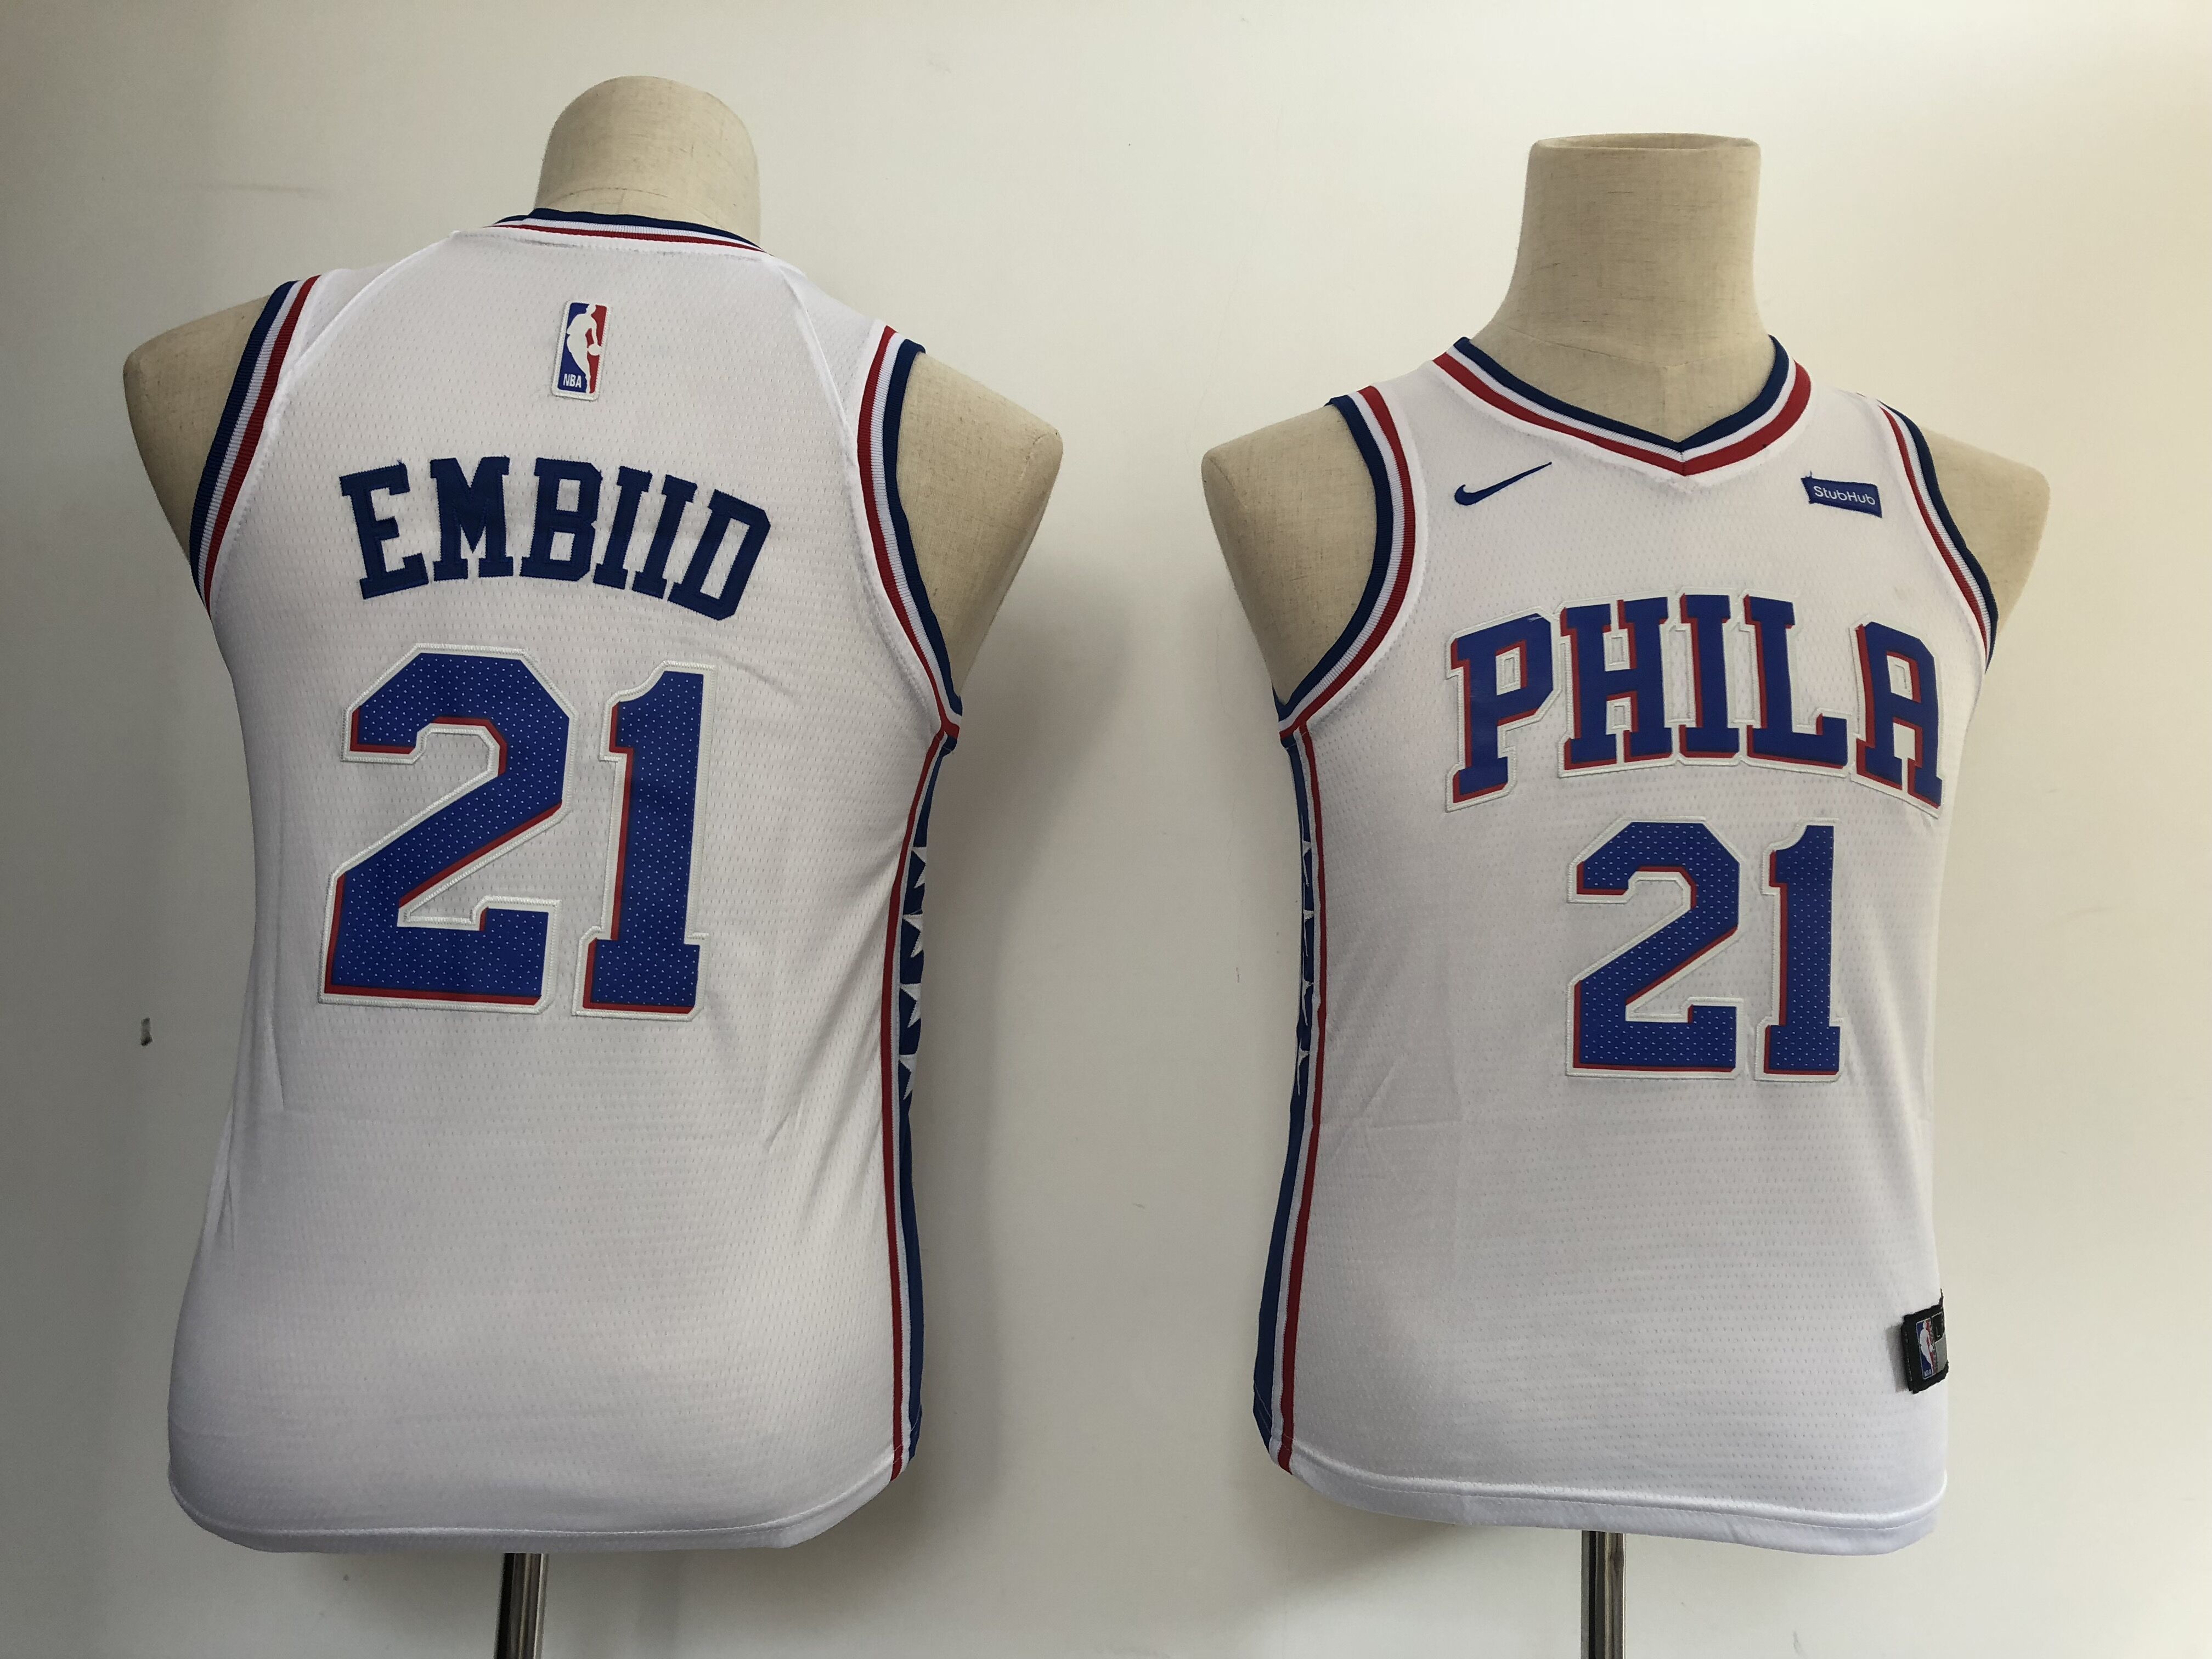 Youth Philadelphia 76ers 21 Embiid white Nike NBA Jerseys